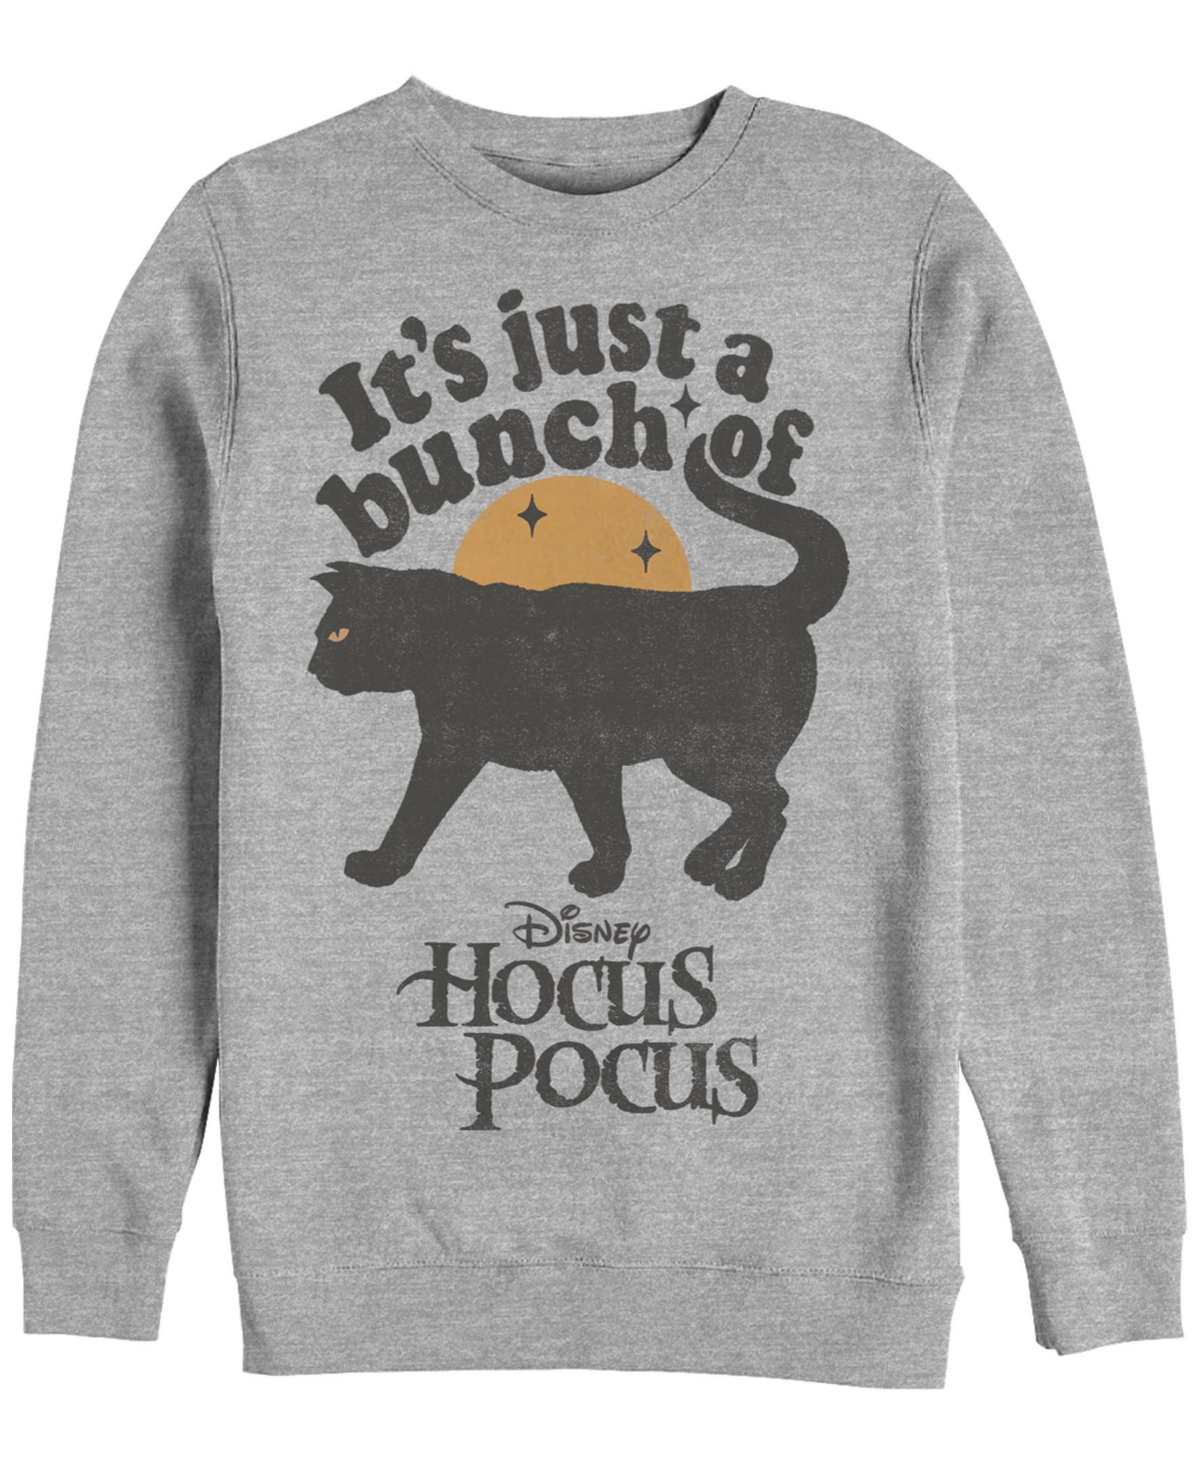 Men's Hocus Pocus Crew Fleece Pullover - Athletic Heather